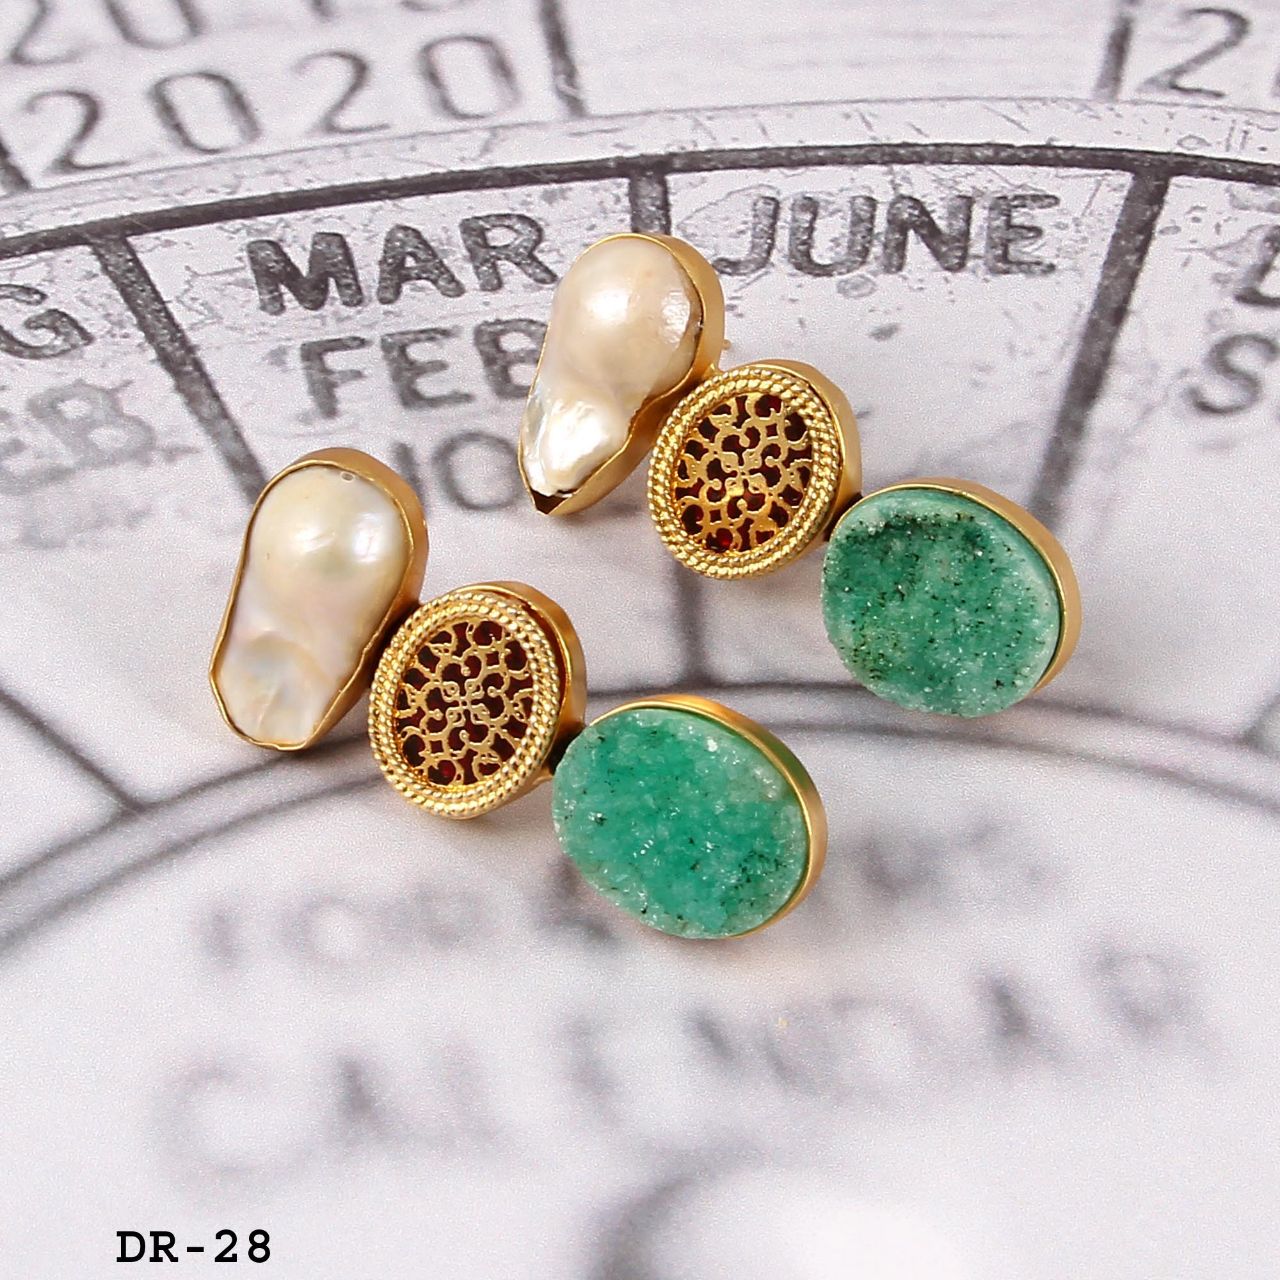 Details more than 70 precious stone earrings latest - esthdonghoadian